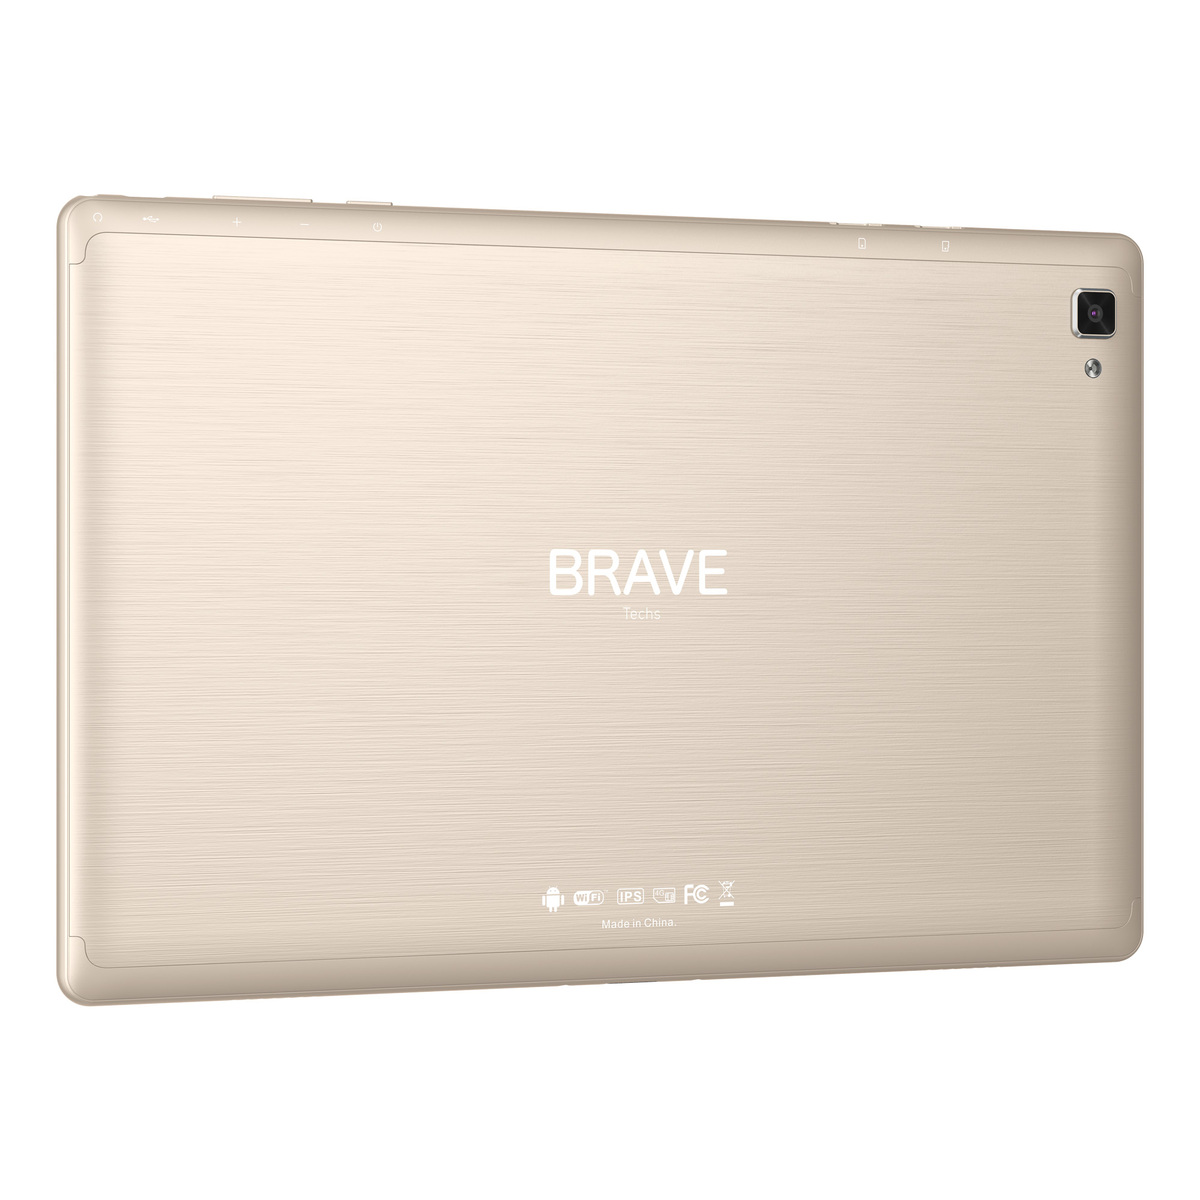 Brave Vaso 10 inches Tablet, 3 GB RAM, 32 GB Storage, BTXS1 + Leather Cover Keyborad